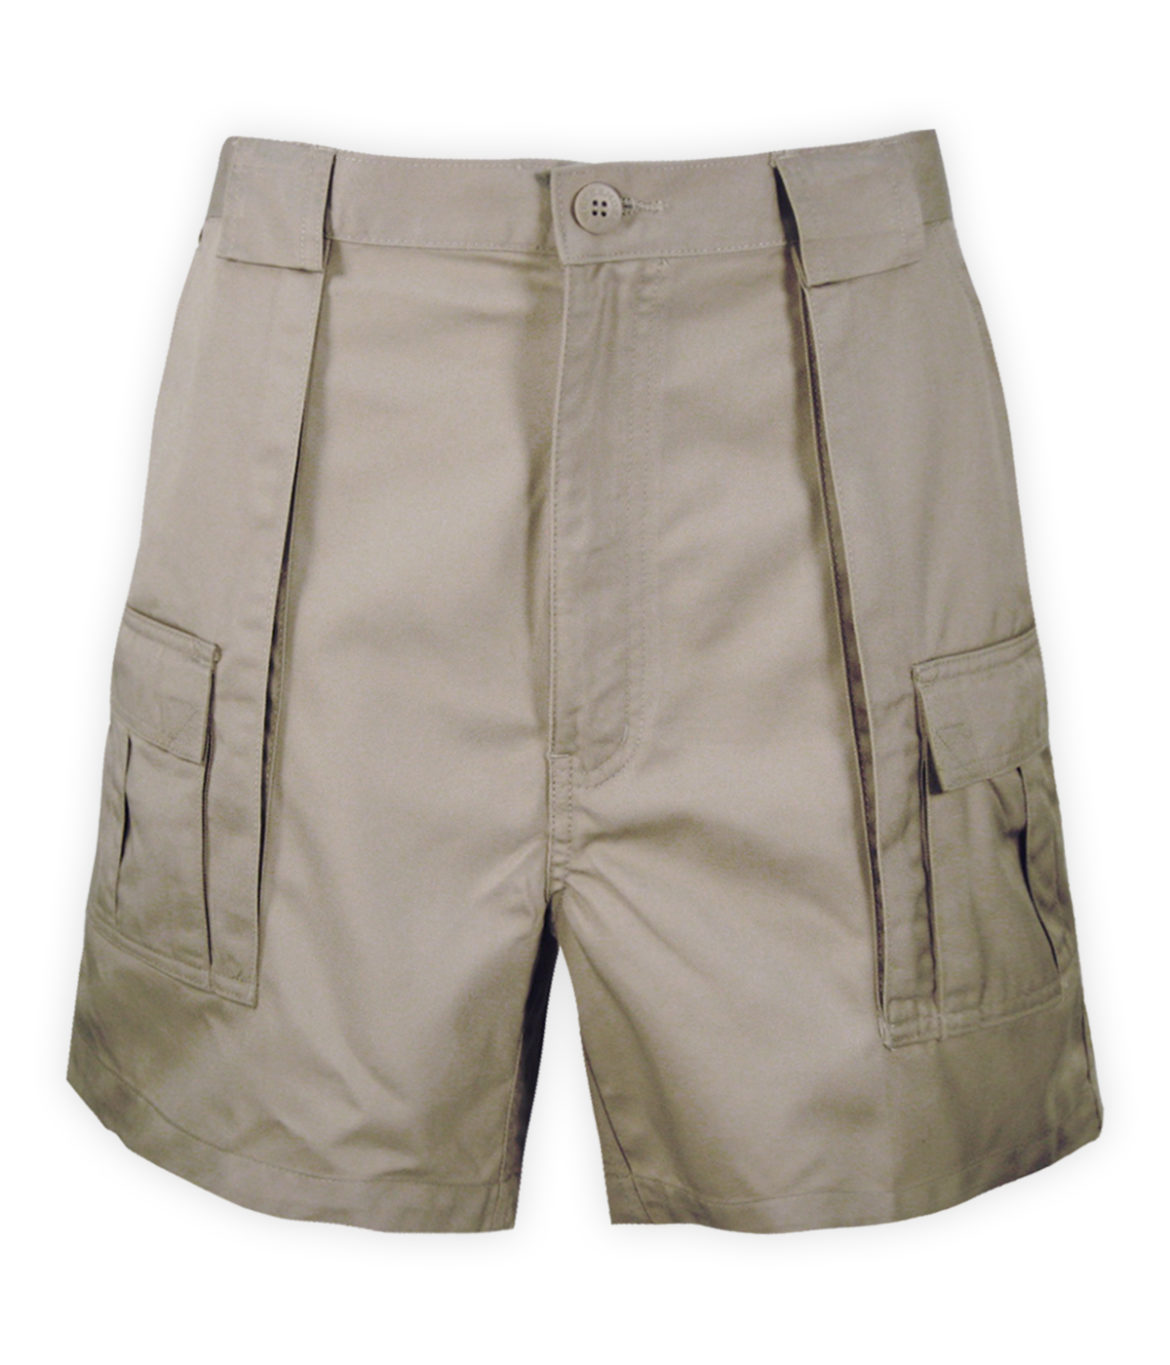 Weekender Trader Shorts - 2 Colors - Size 32 - 42